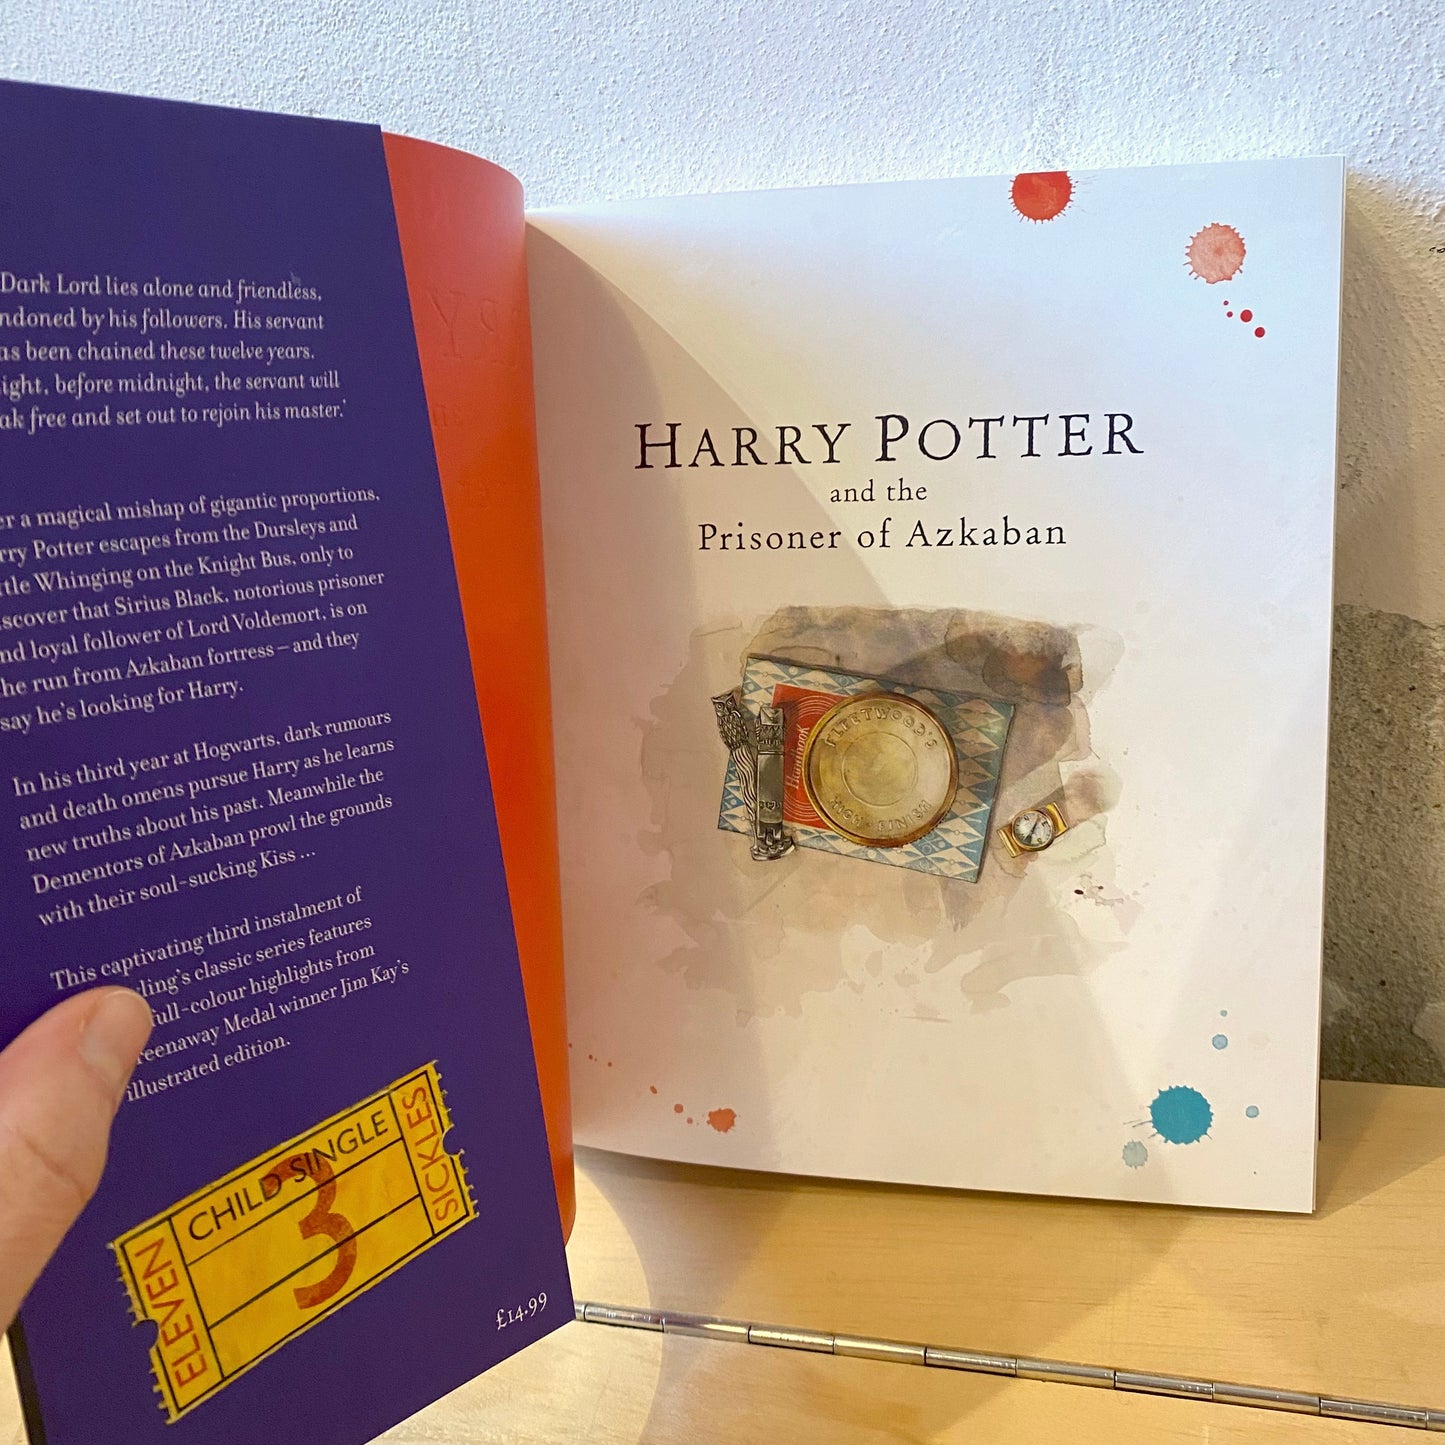 Harry Potter and the Prisoner of Azkaban (illustrated) - J.K. Rowling, Jim Kay